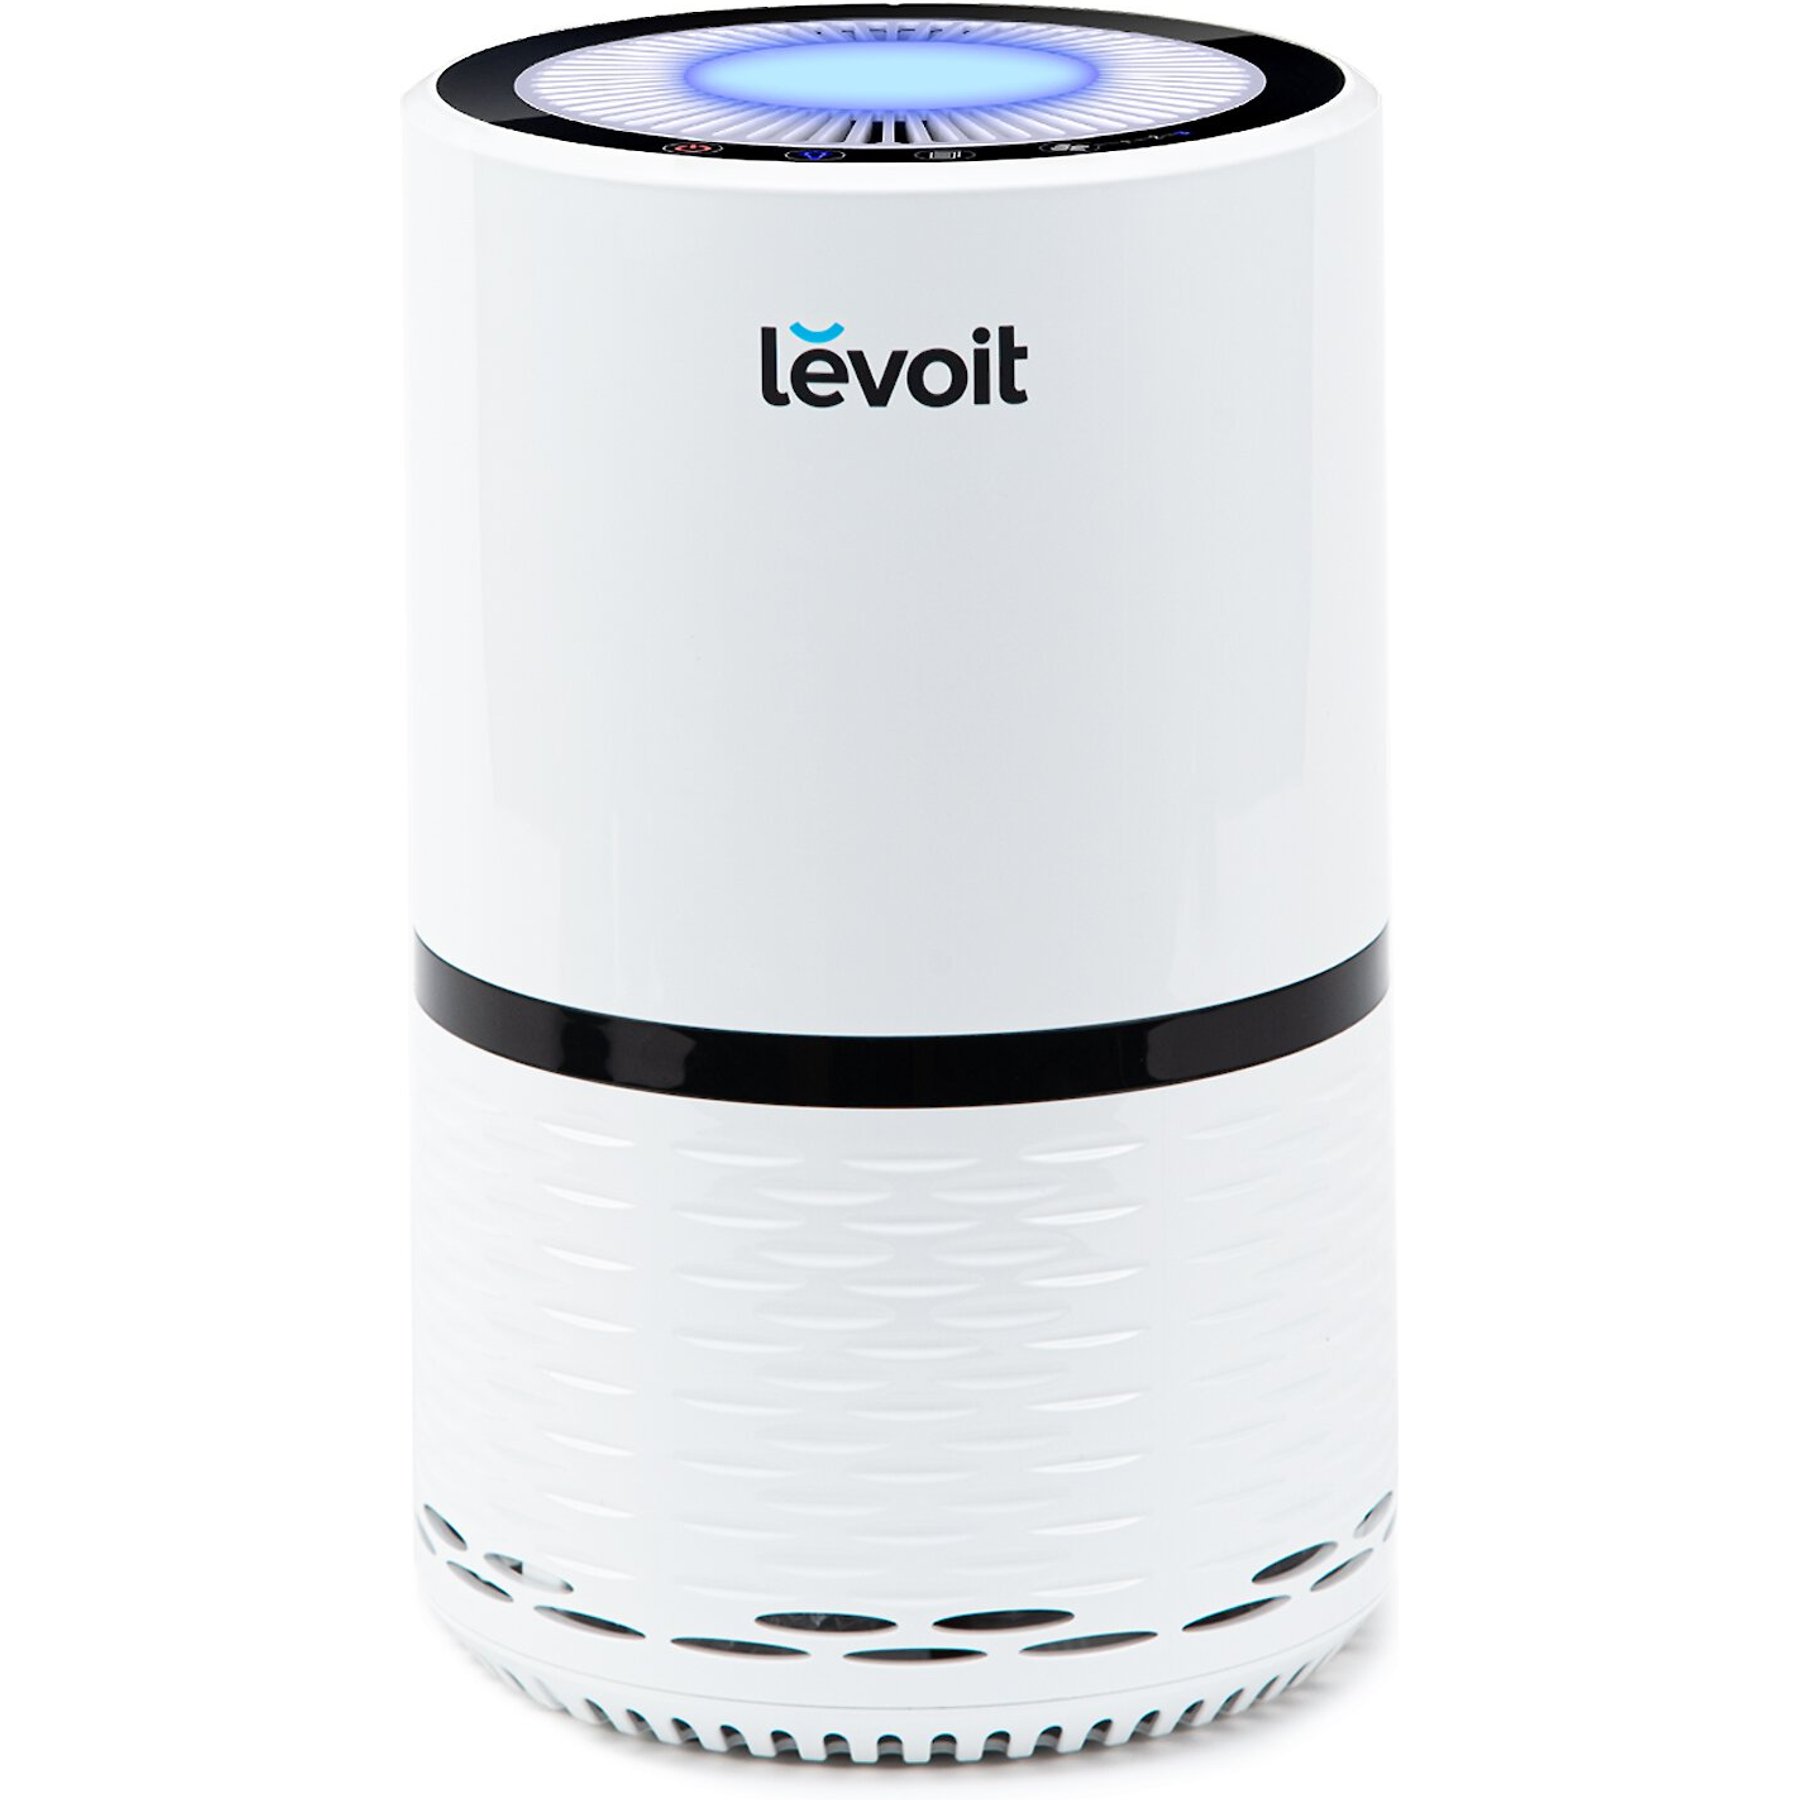 Levoit Air Purifier LV-H132 HEPA filter change - EASY DIY! 